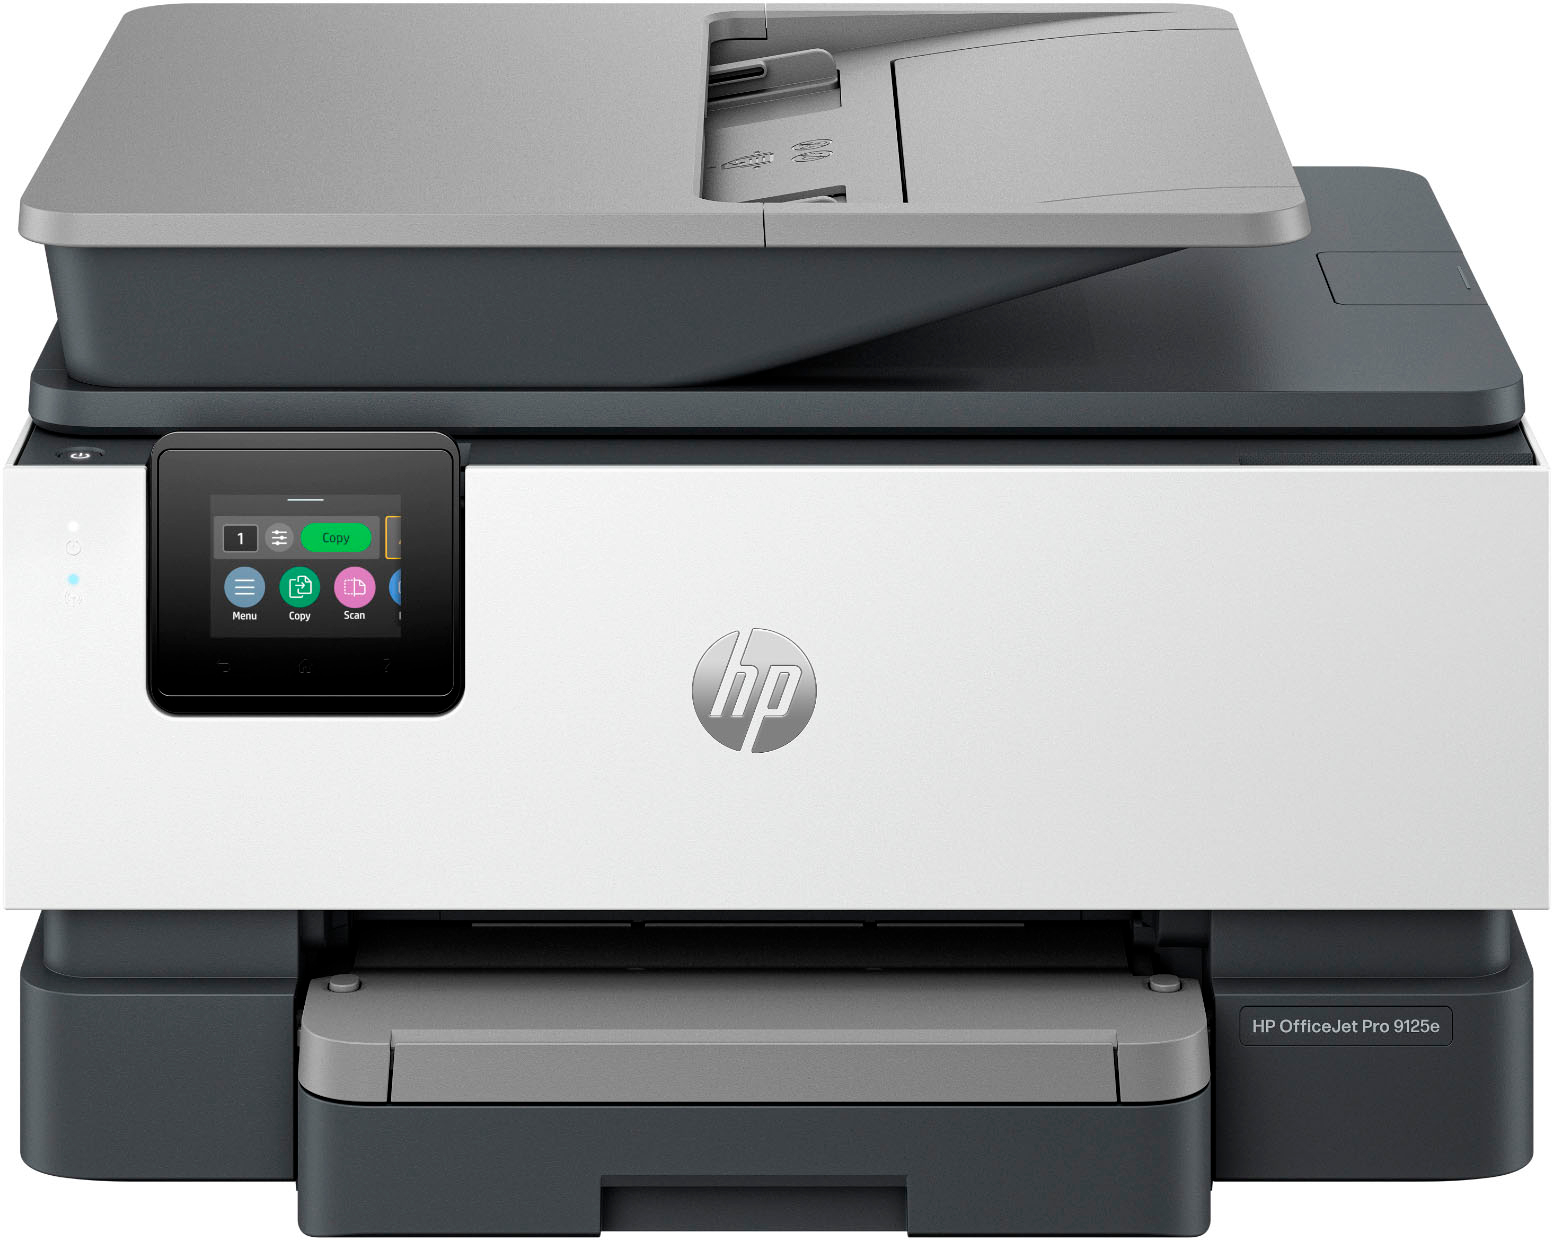 HP DeskJet 2734e Wireless All-In-One Inkjet Printer with 3 months